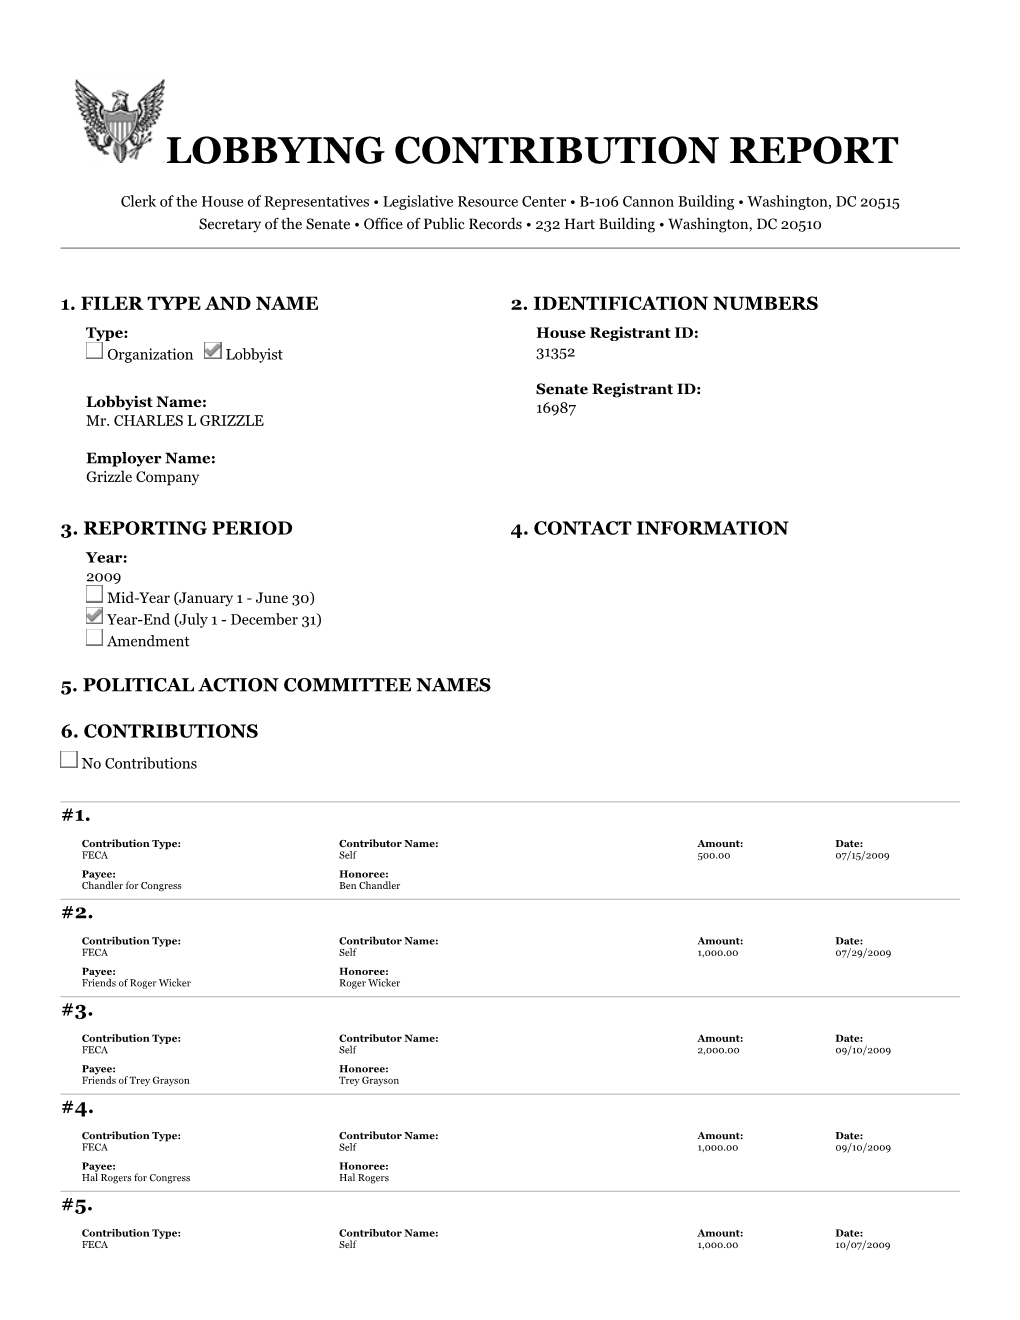 Lobbying Contribution Report